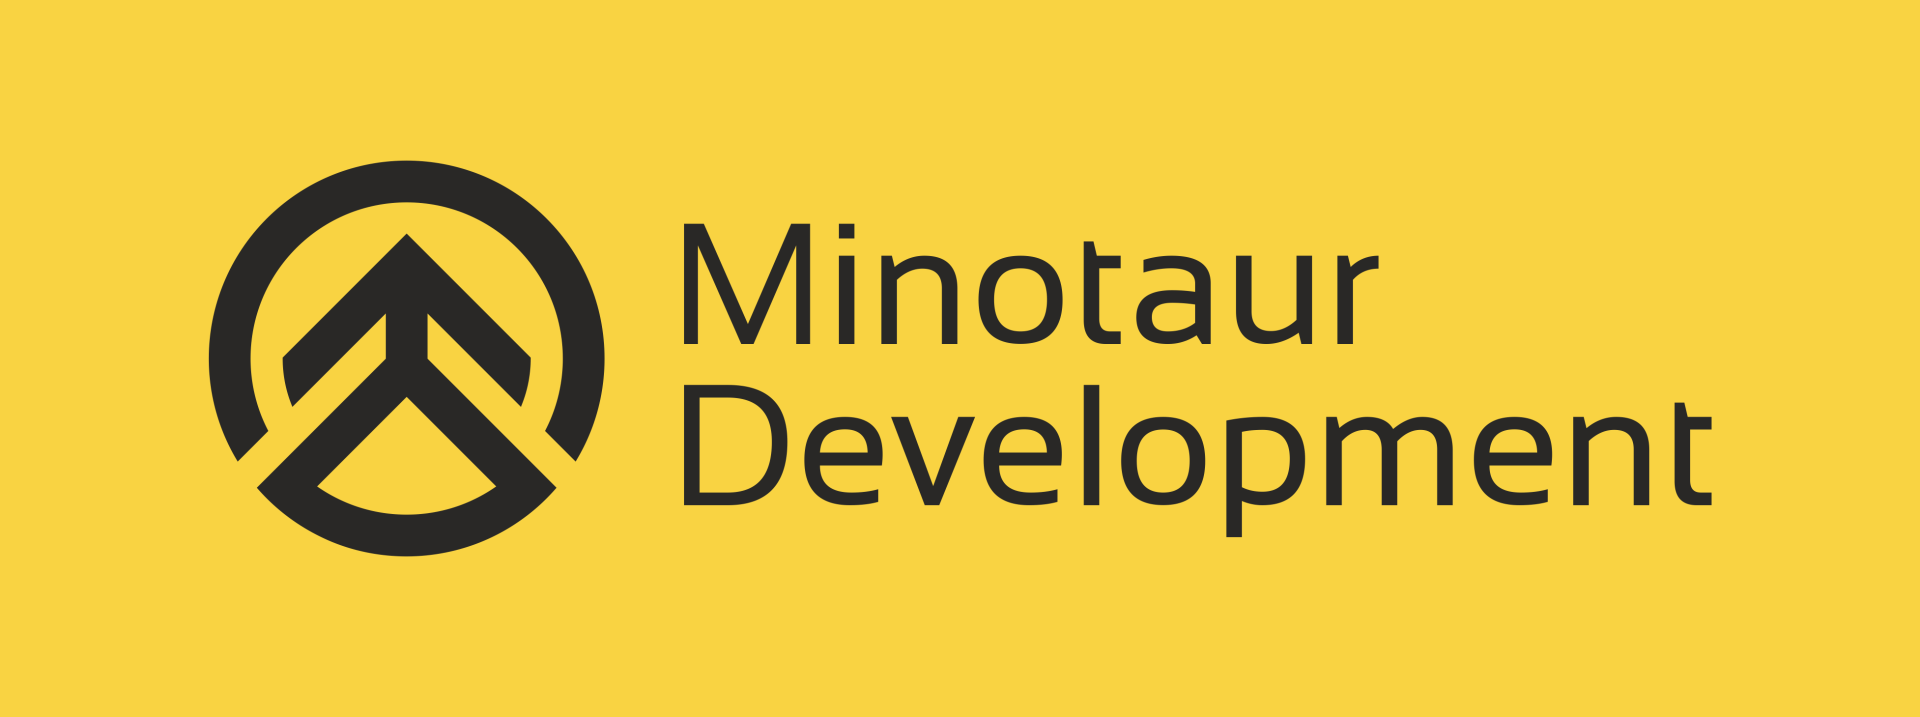 Minotaur Development Logo